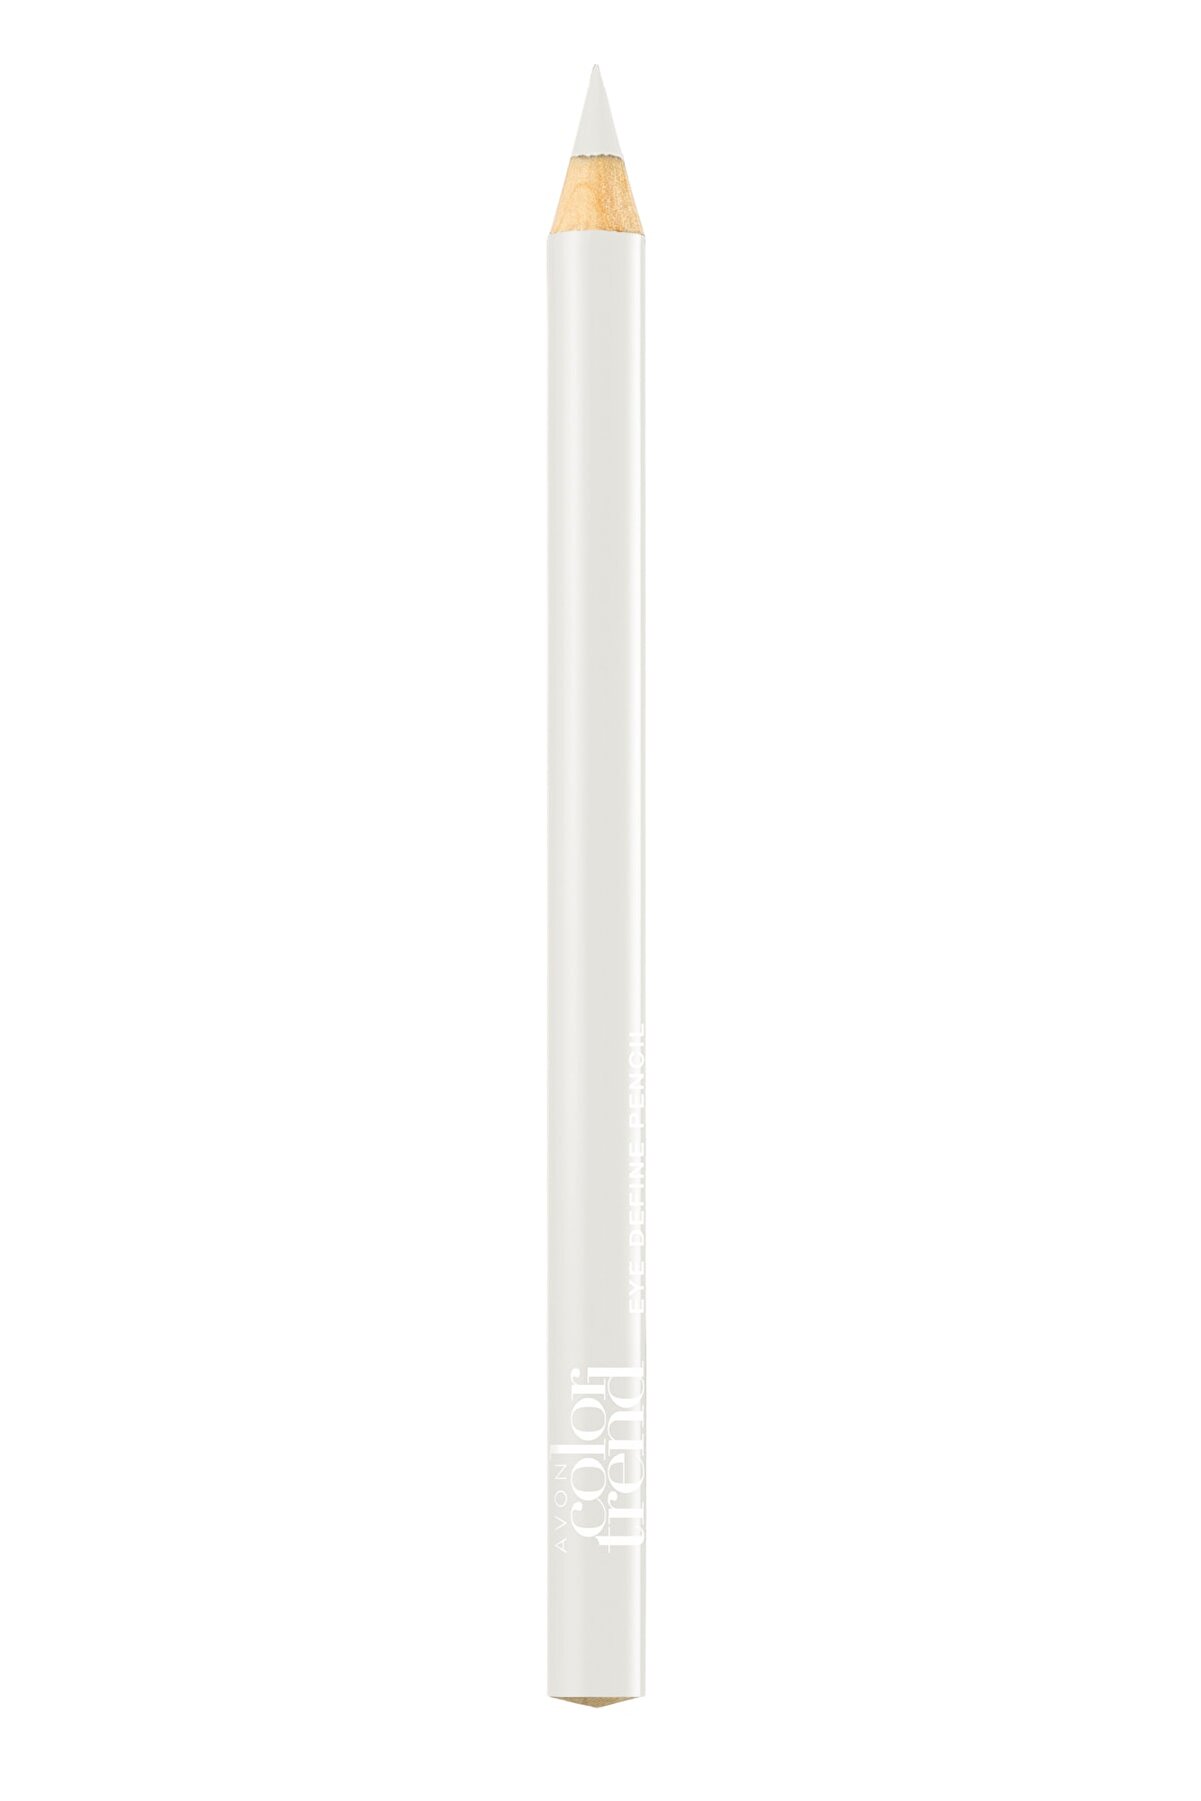 Avon Color Trend Beyaz Göz Kalemi - White 8681298935223